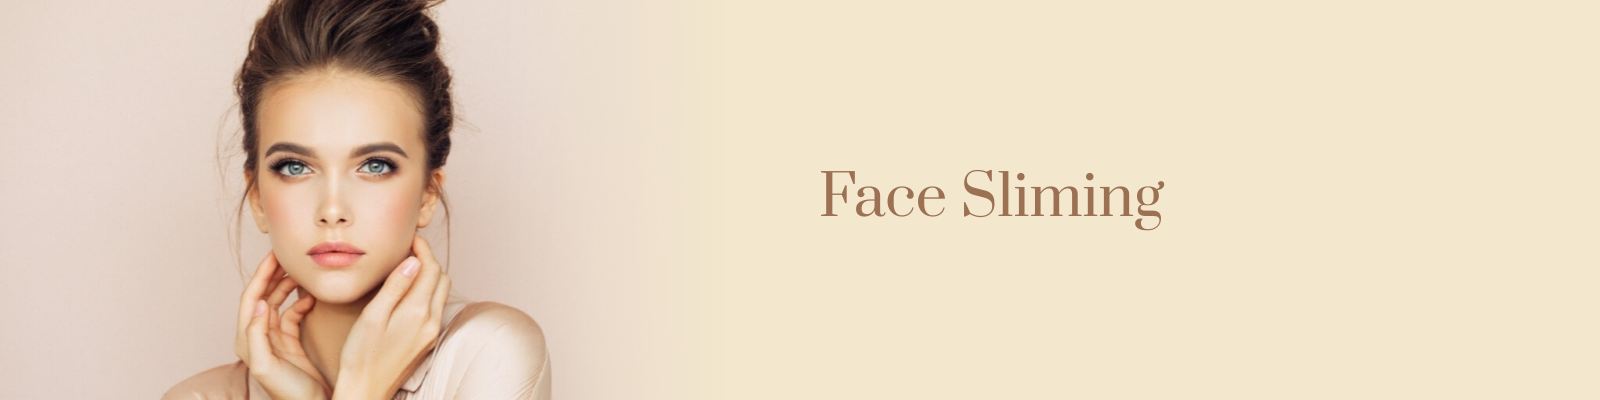 Face Sliming Treatment in Delhi